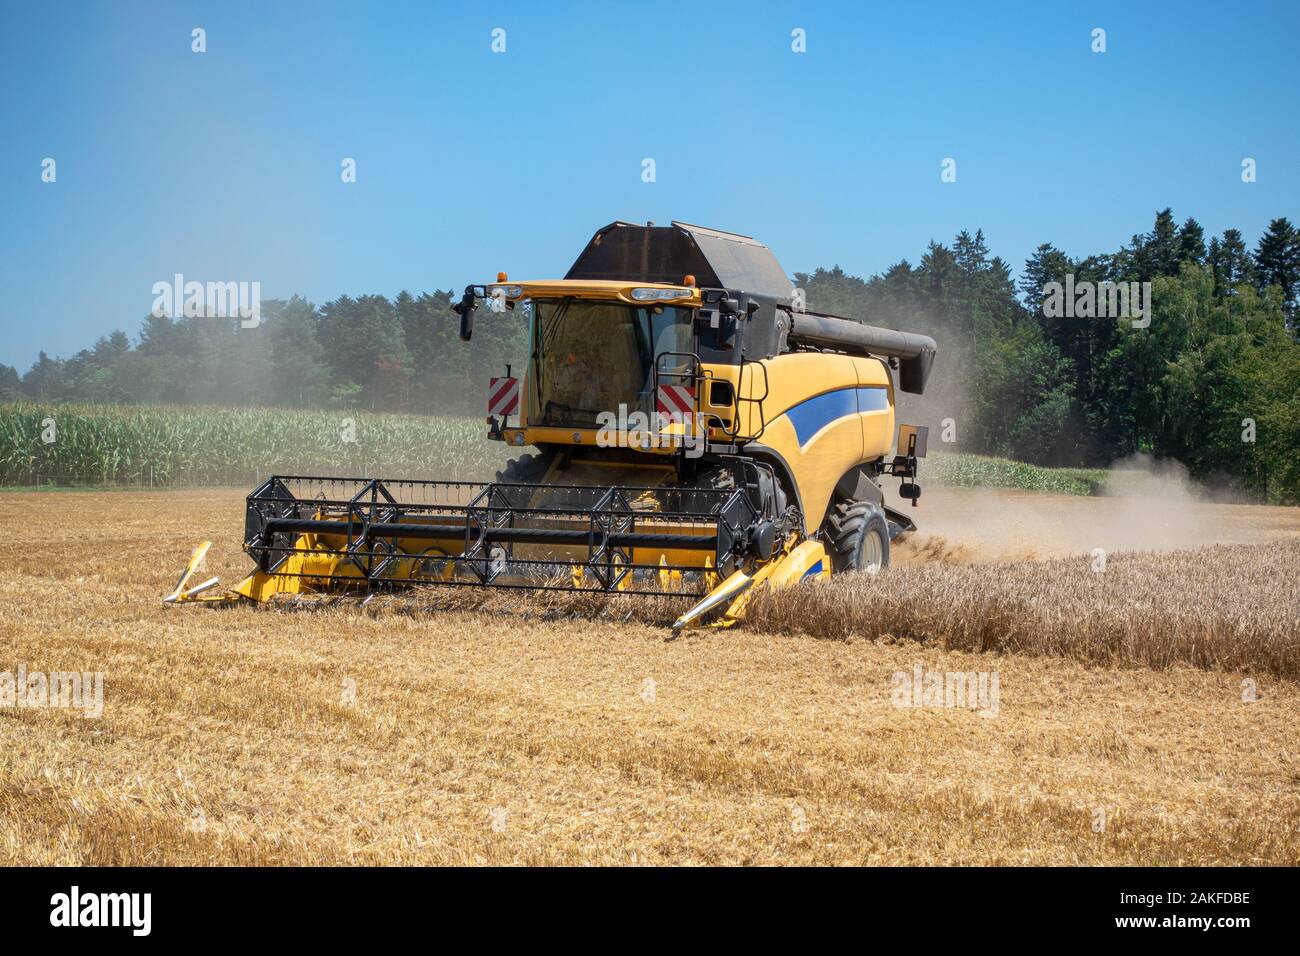 Combine harvester is harvesting a grain field Stock Photo